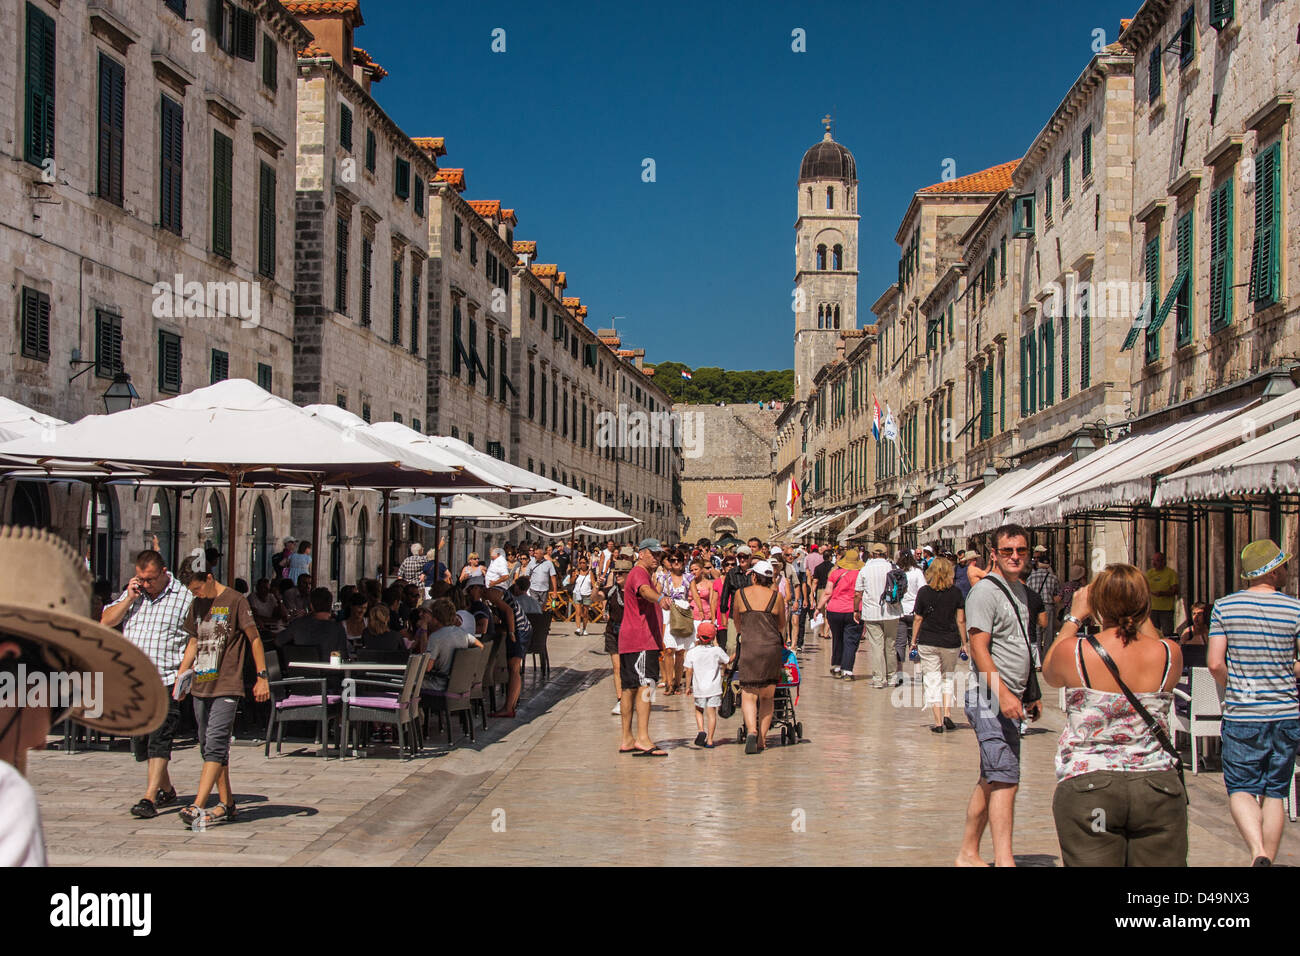 Picture taken in Dubrovnik, Croatia Stock Photo